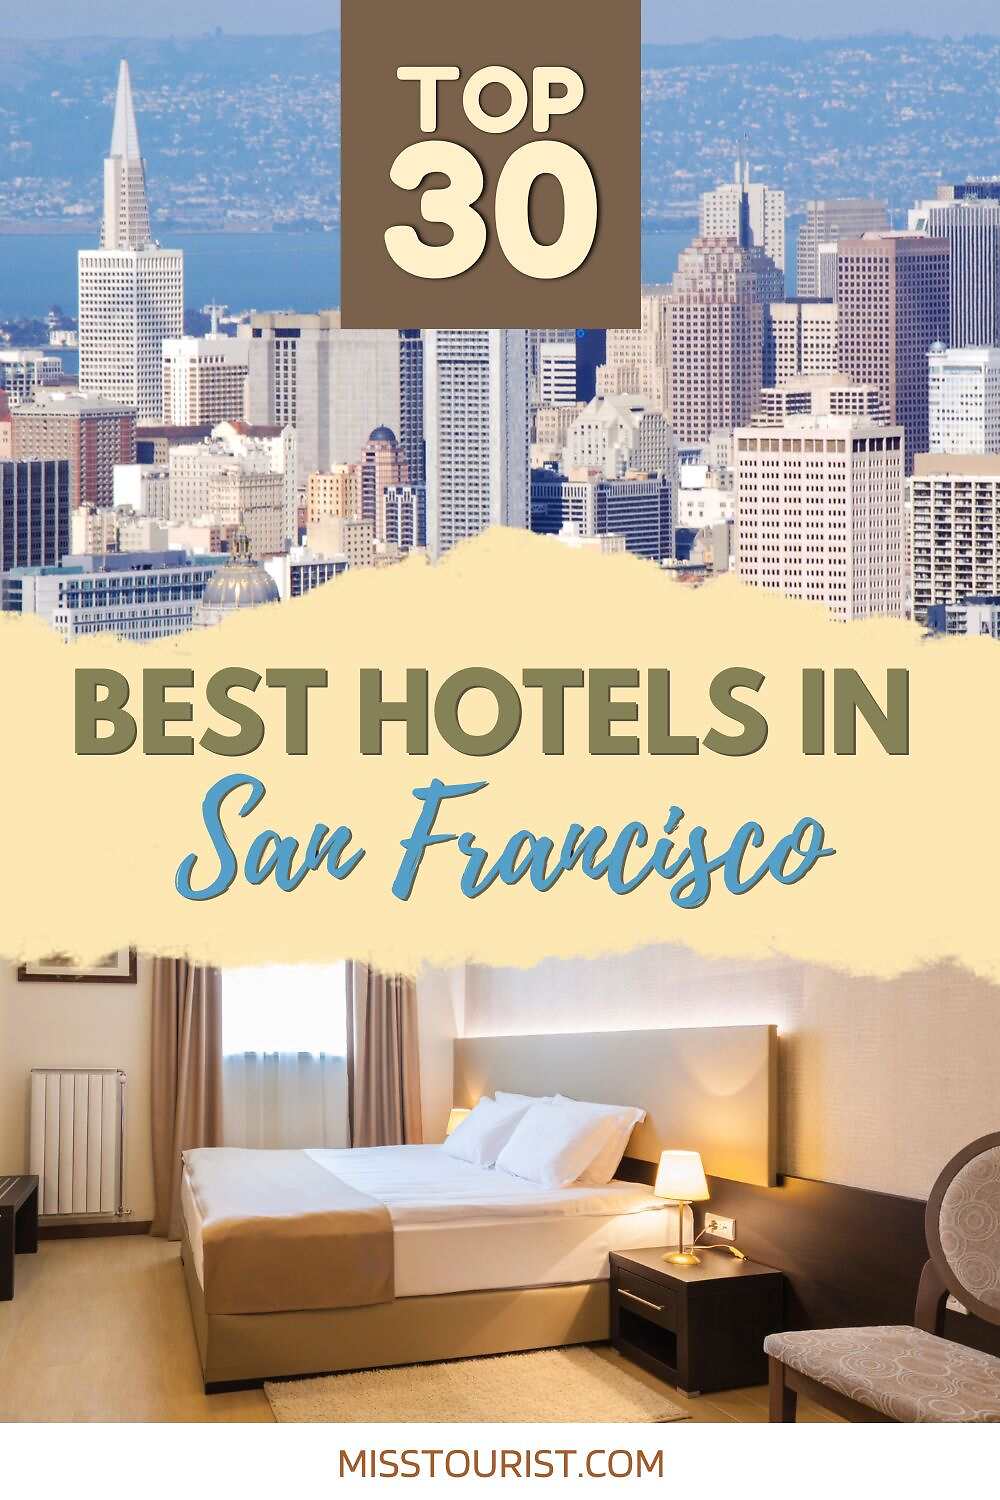 best hotels in san francisco pin 1